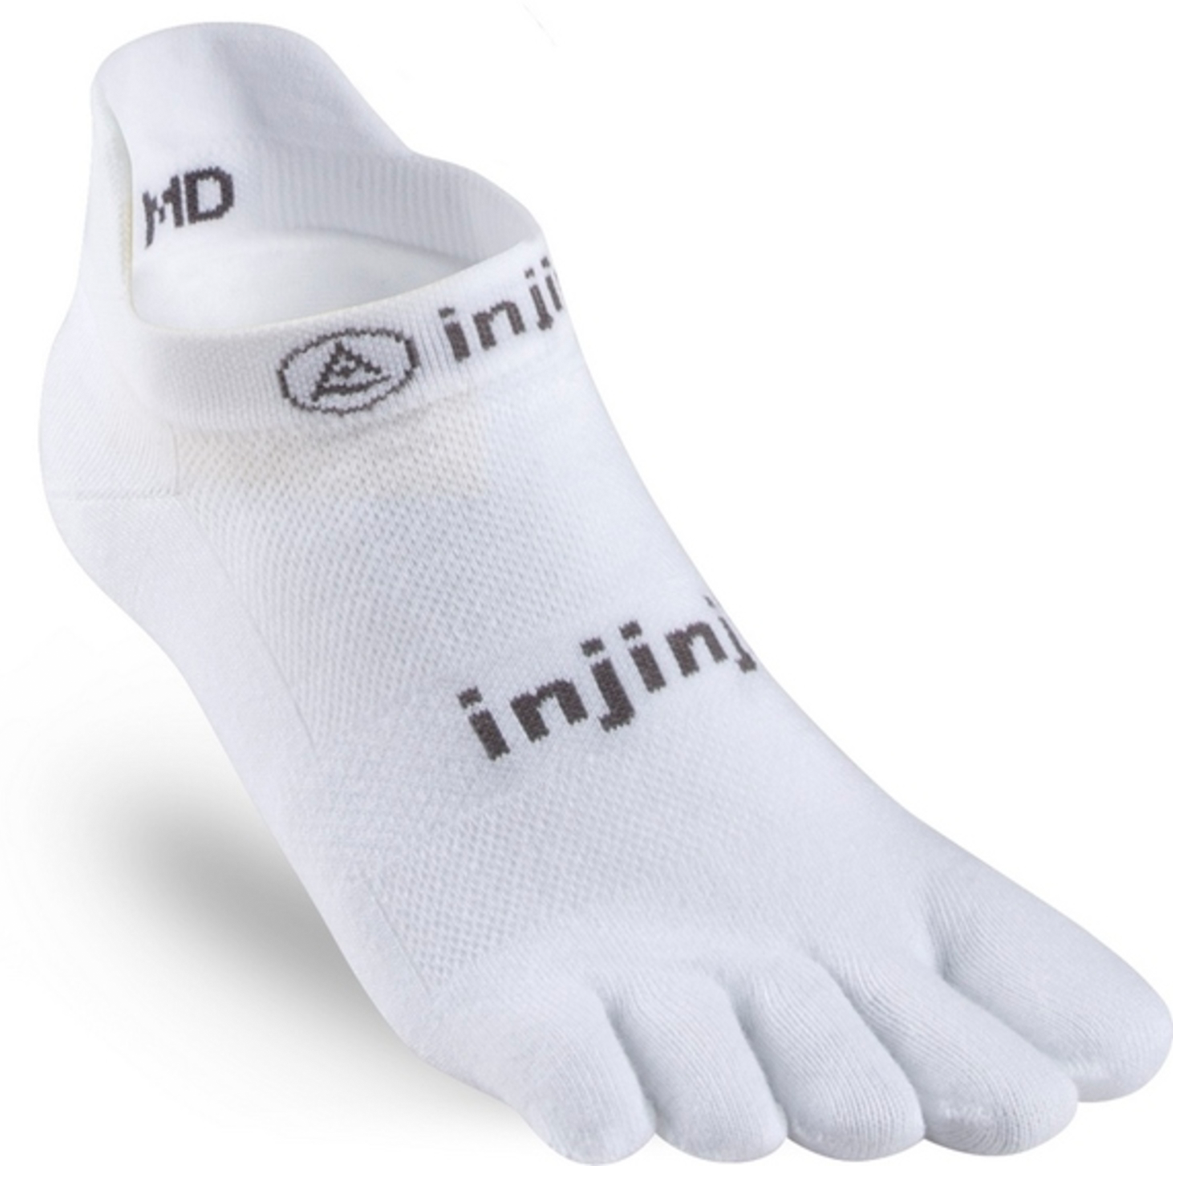 Injinji original UNISEX - My Foot Function